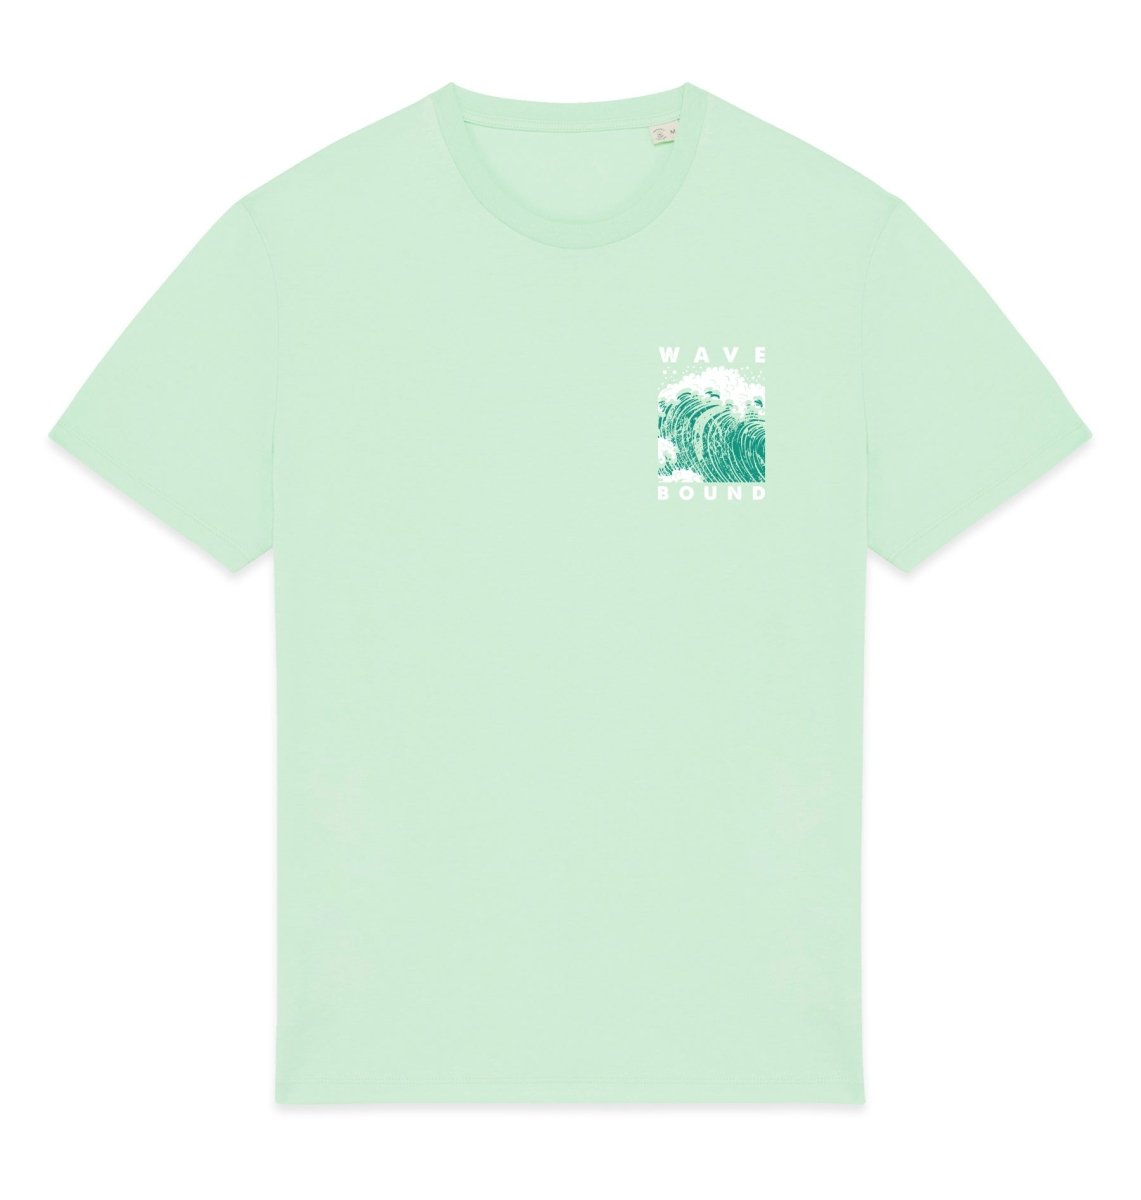 Wavebound Graphic Mens T-shirt - Blue Panda